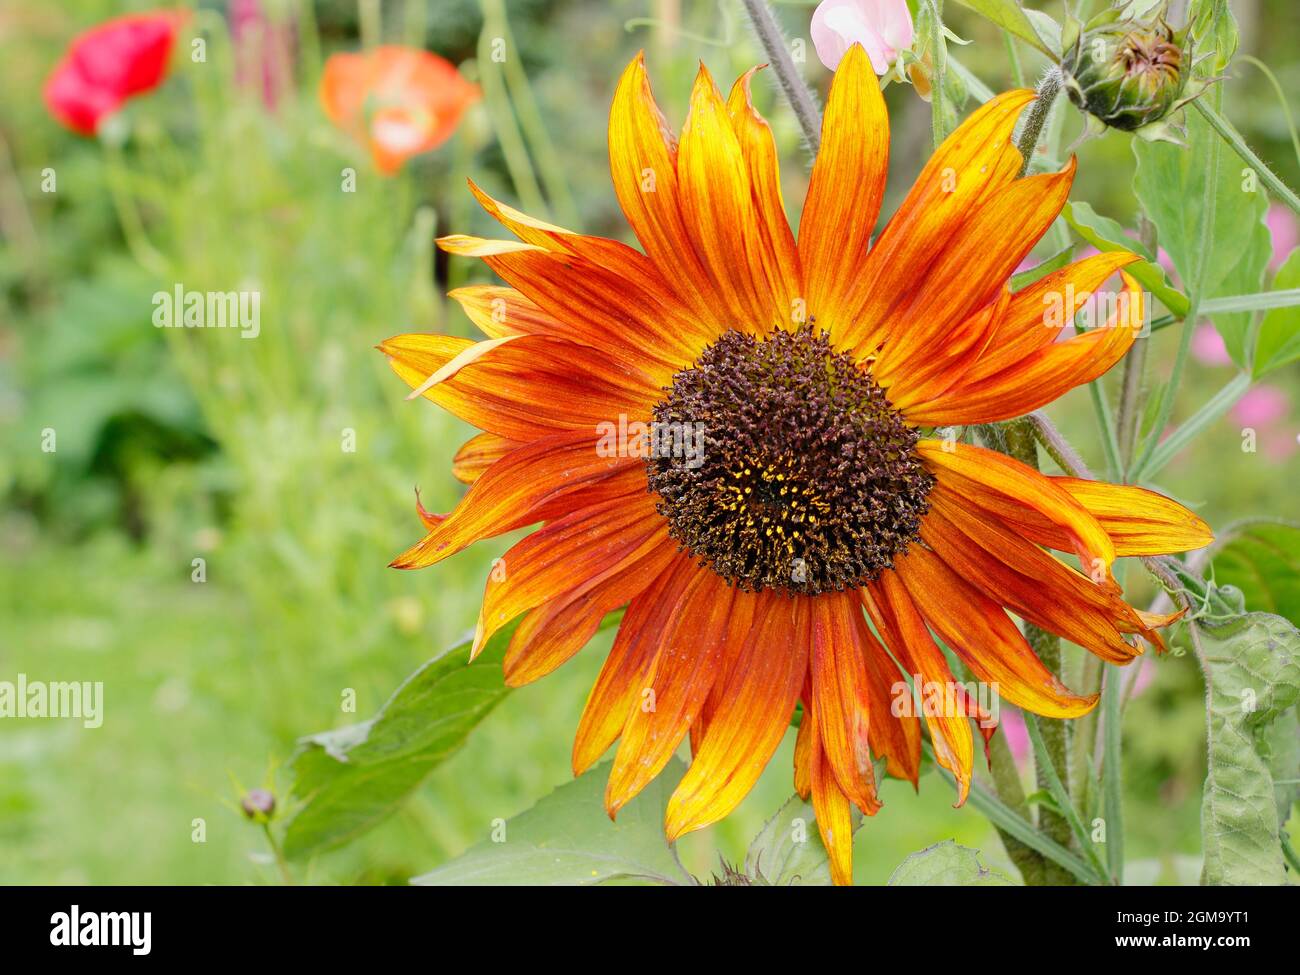 Helianthus annuus 'Earthwalker' sunflower growing in an English garden. UK Stock Photo